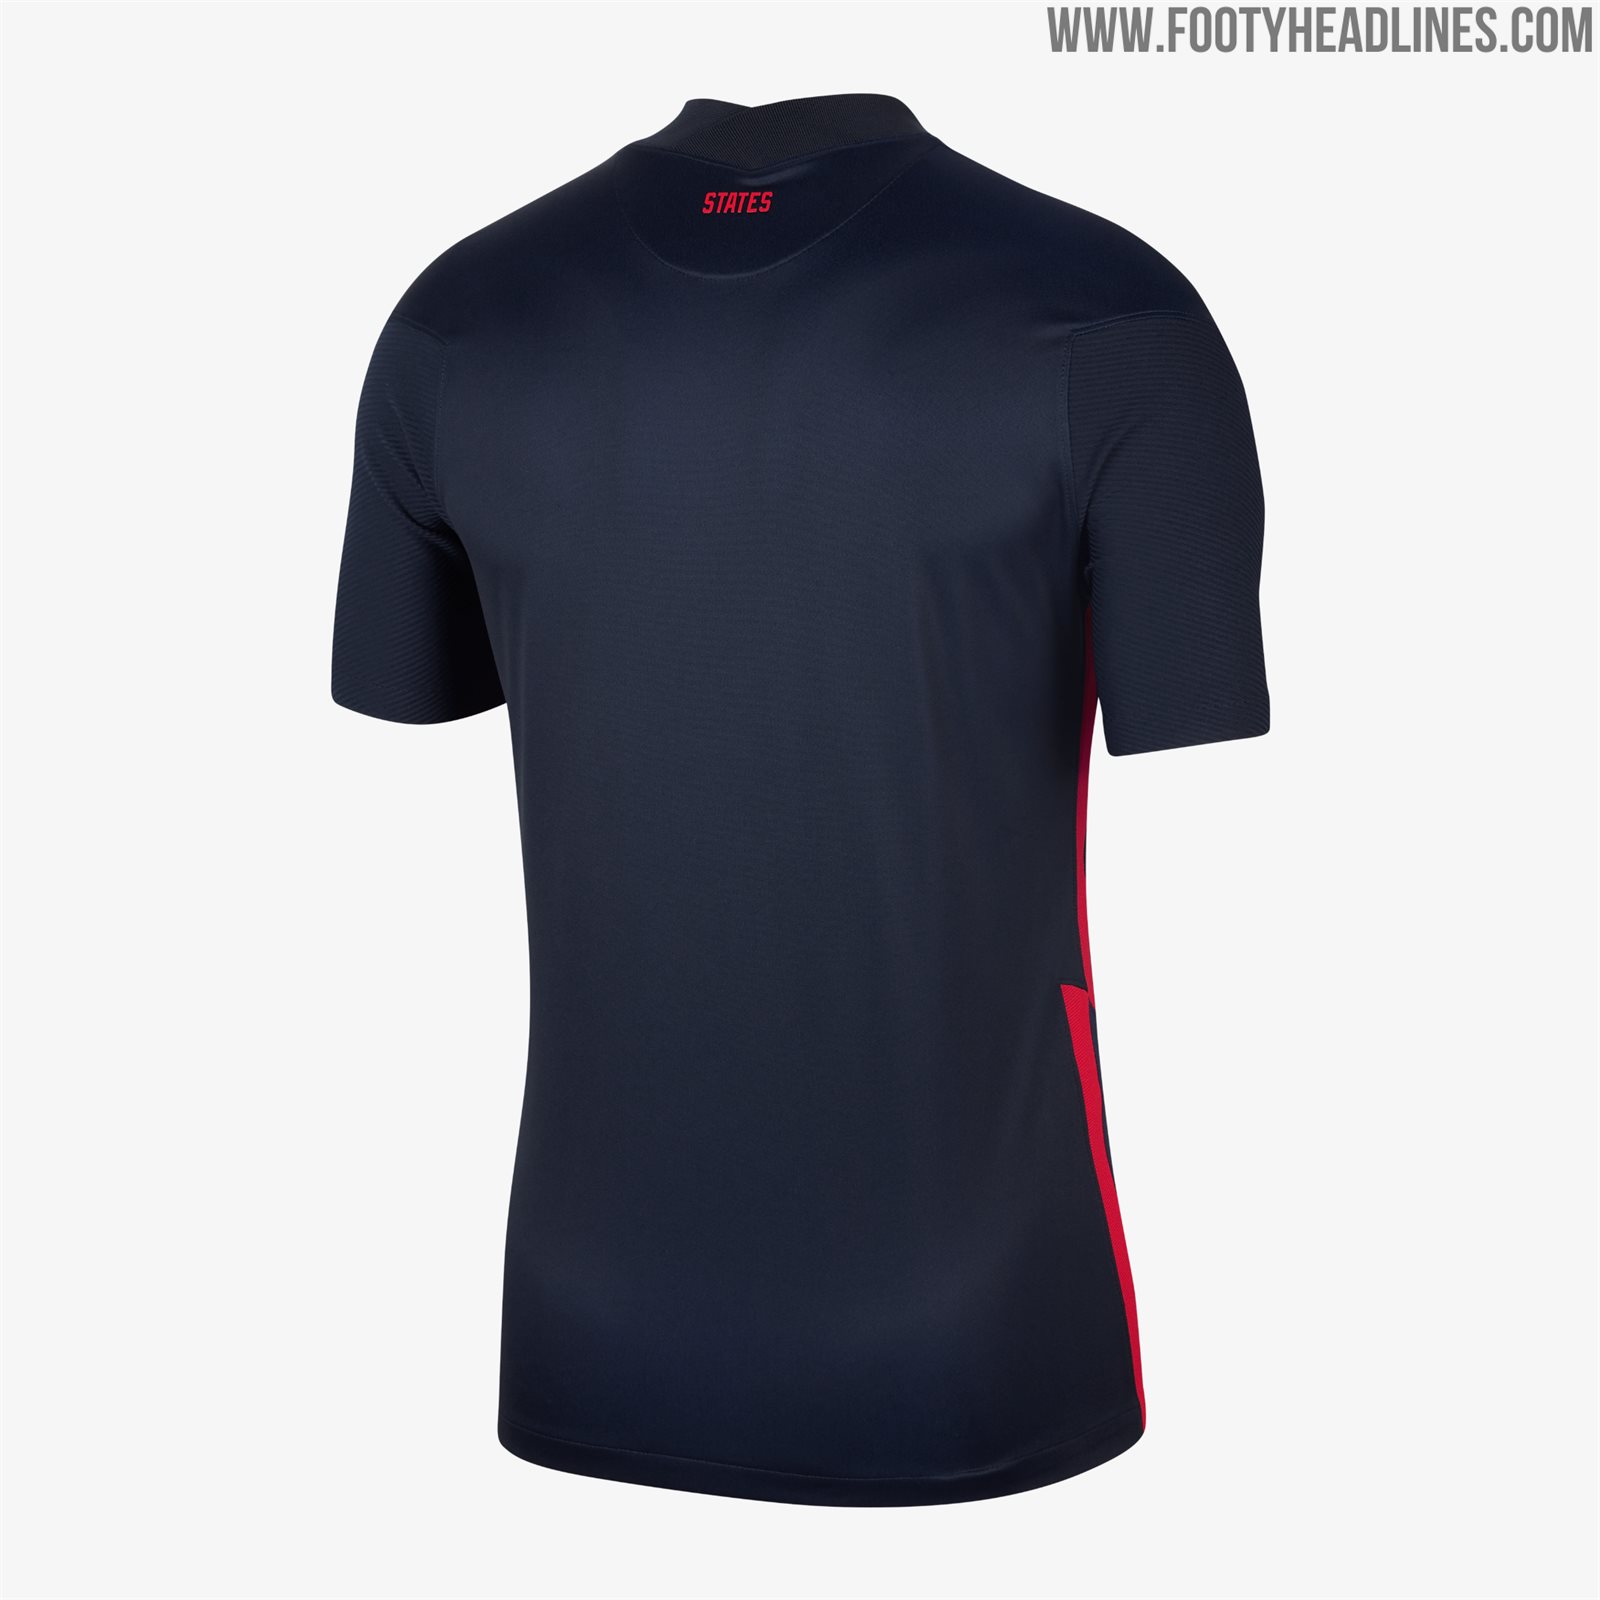 Nike USA 2020 Home & Away Kits Released - Footy Headlines